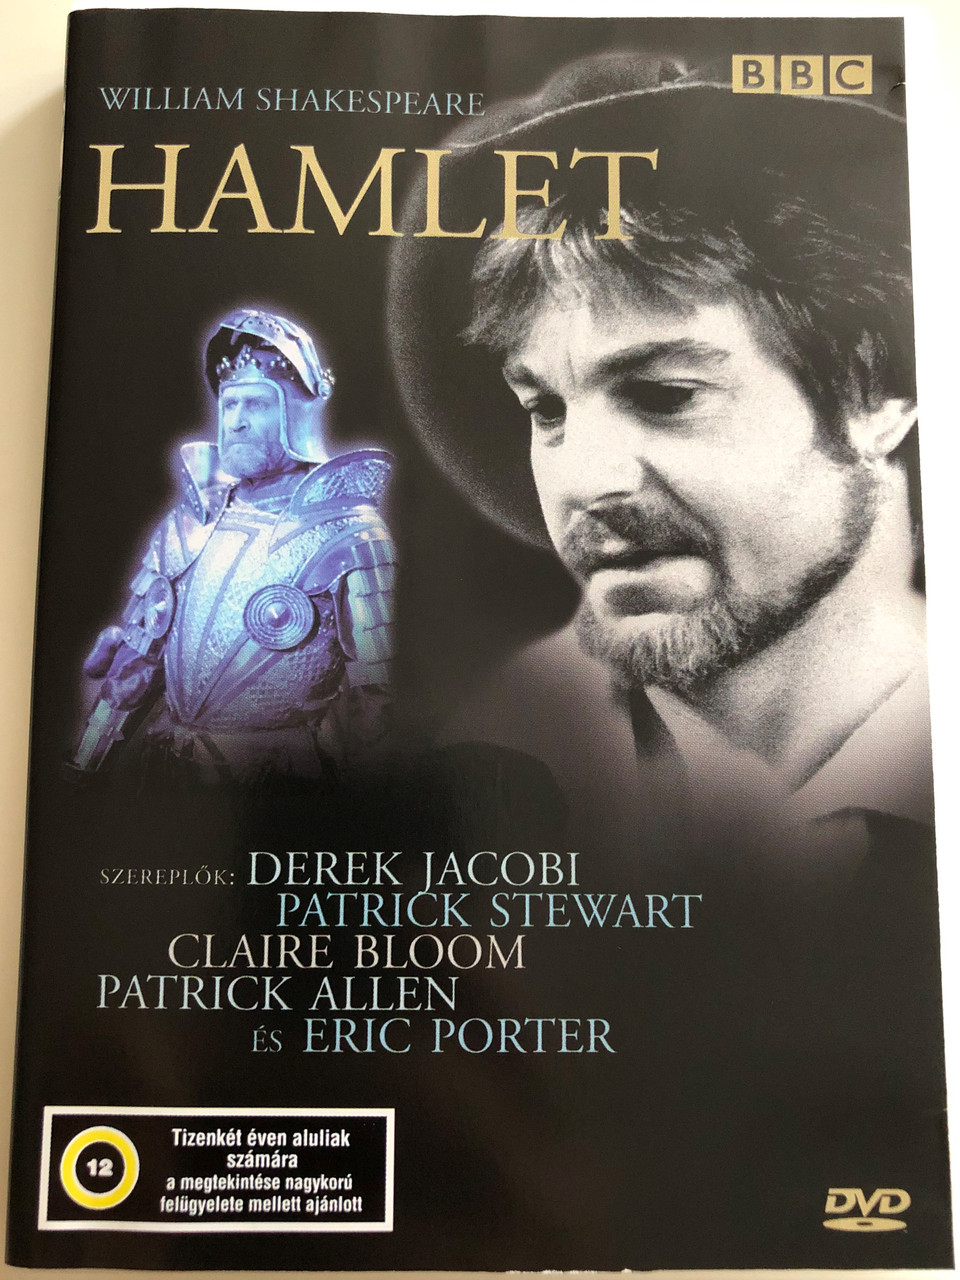 William Shakespeare - Hamlet DVD 1980 / BBC Theatre Play / Directed by  Rodney Bennett / Cast: Derek Jacobi - Hamlet, Claire Bloom - Gertrude,  Patrick Stewart - Claudius, Lalla Ward - Ophelia - Bible in My Language